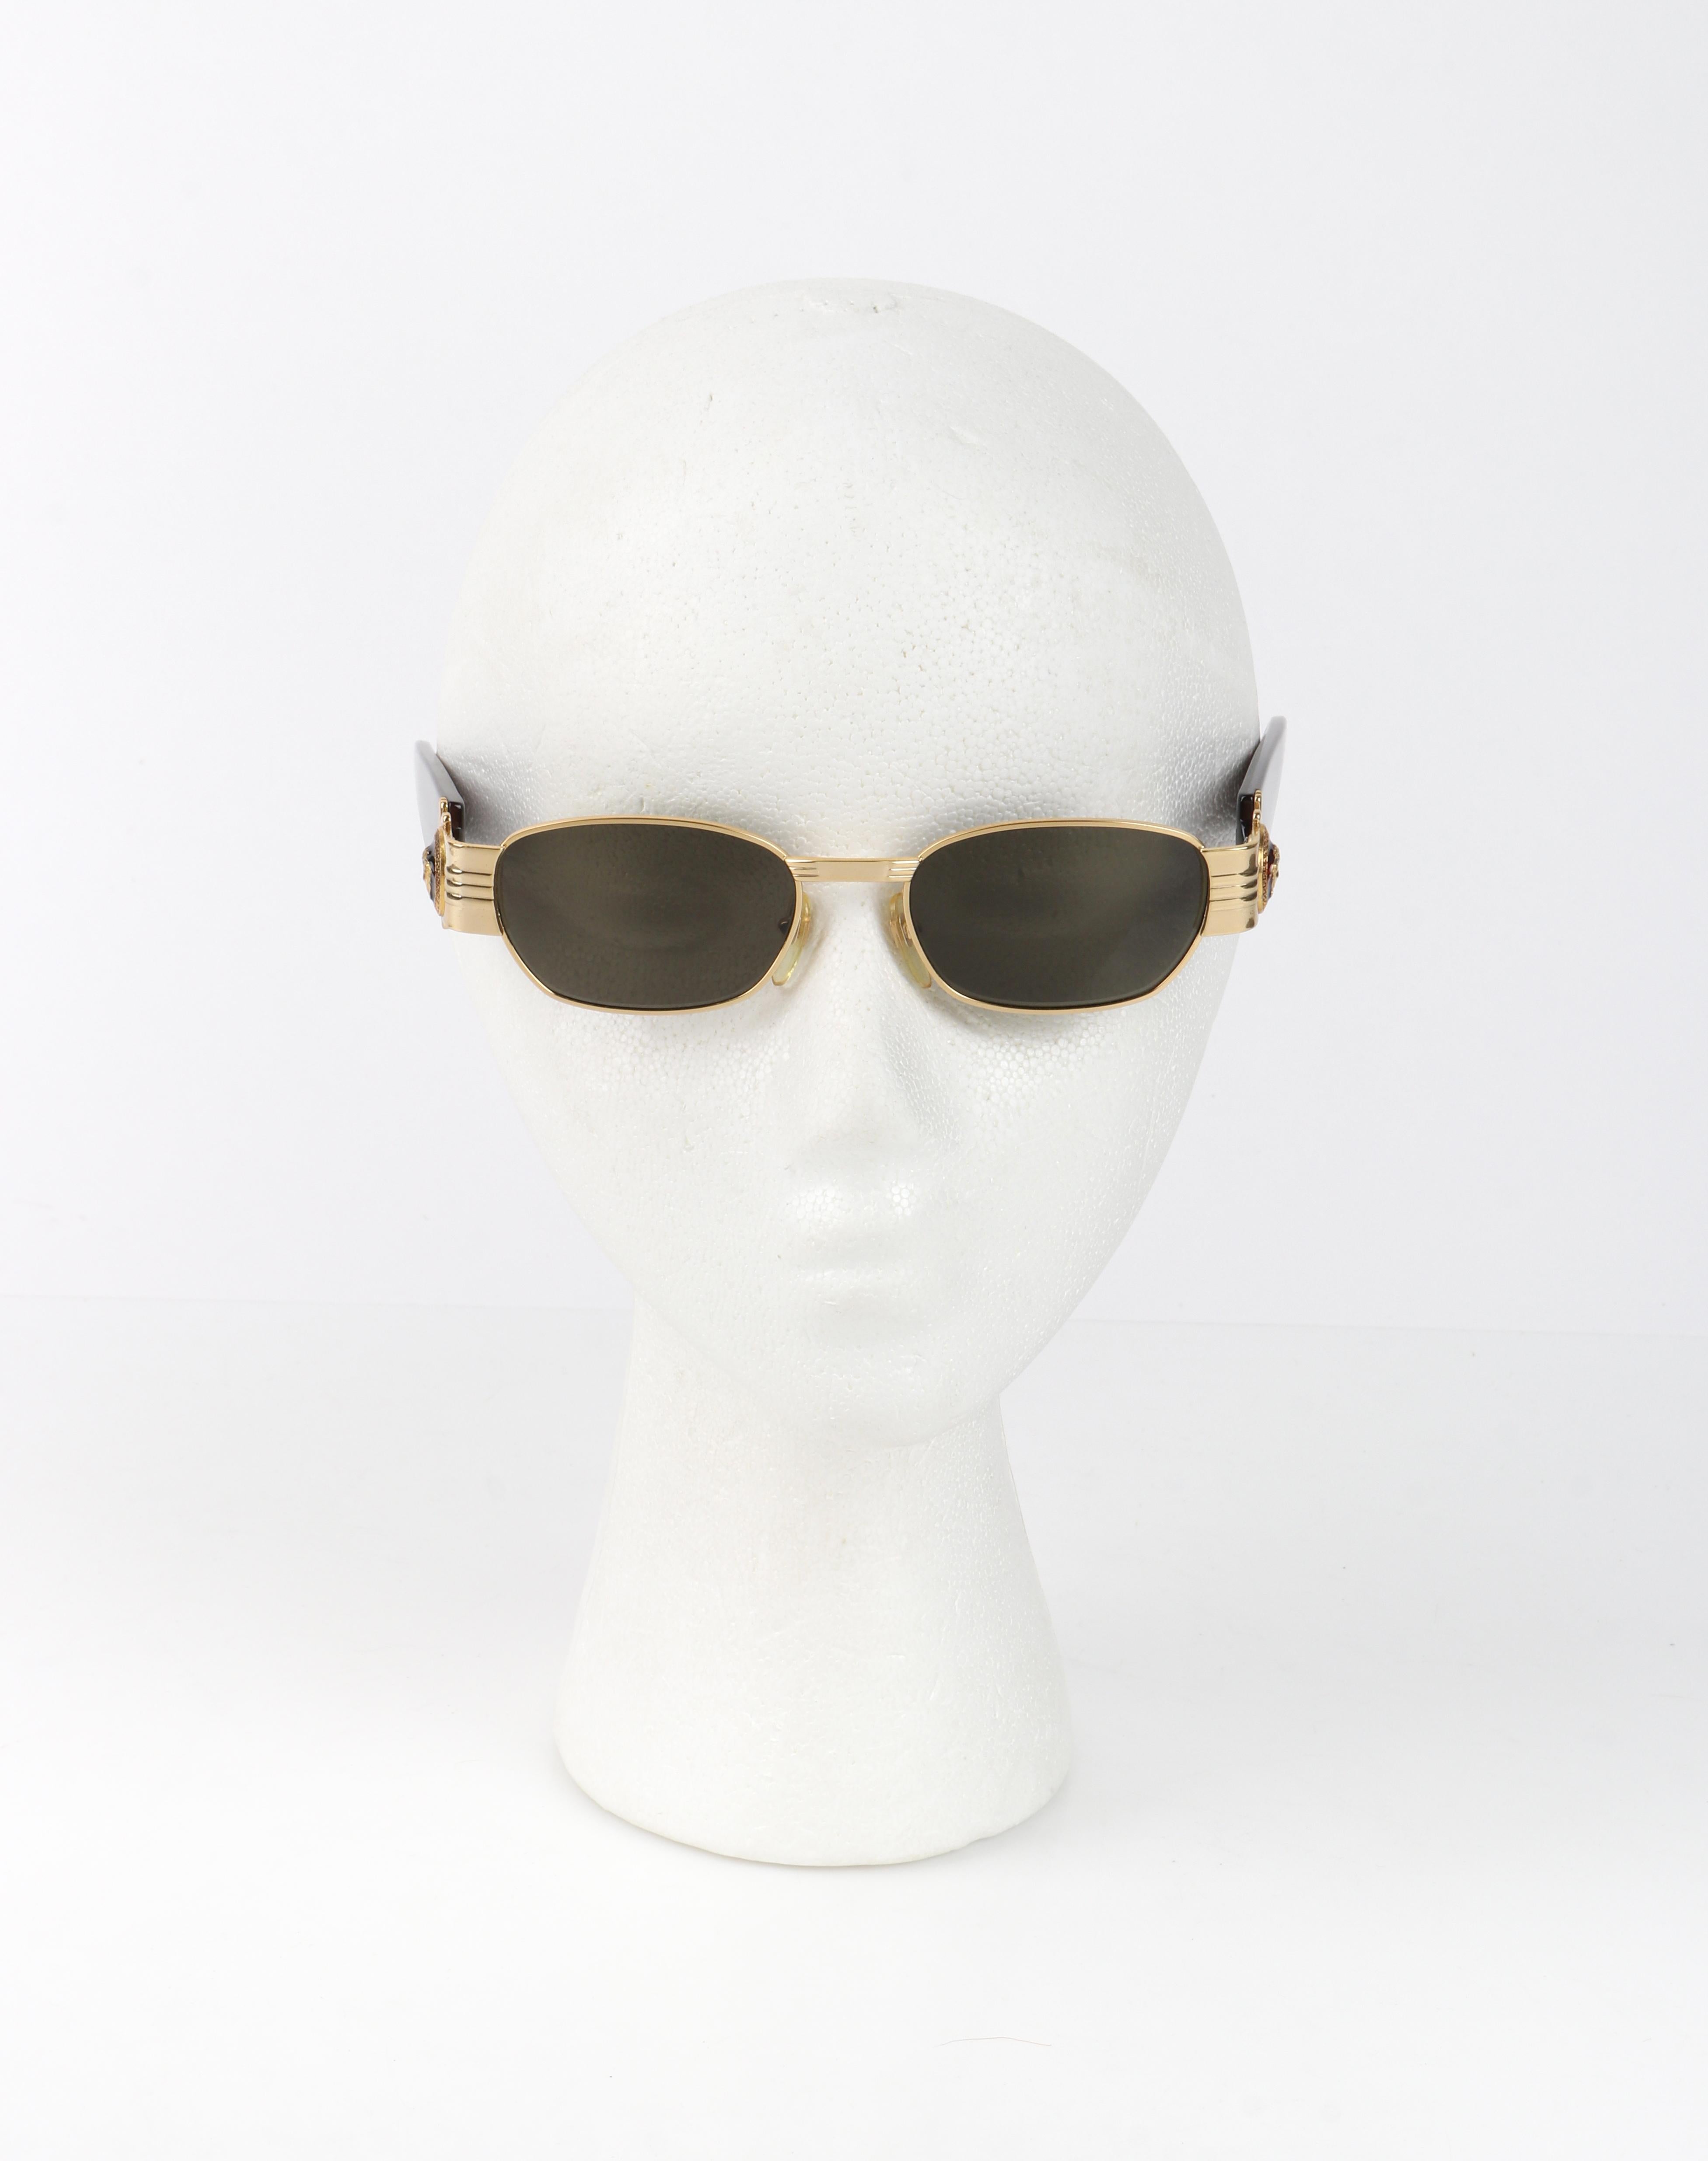 GIANNI VERSACE c.1990s Gold Tortoiseshell Medusa Emblem Oval Shaped Sunglasses For Sale 3